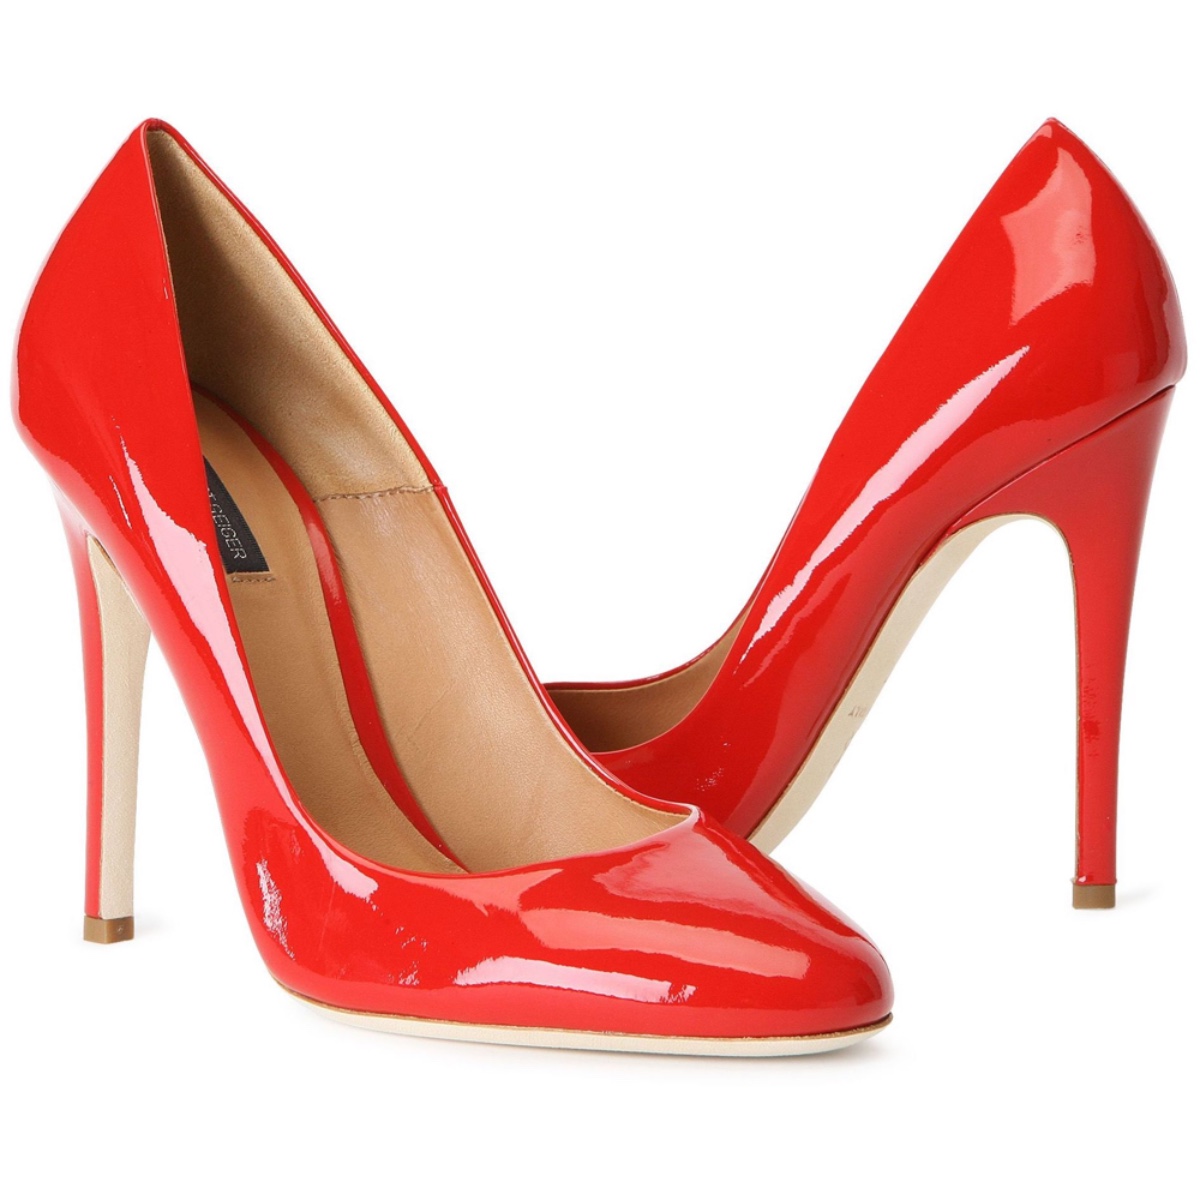 Jessica Rabbit Costume - Who Framed Roger Rabbit Fancy Dress - Red High Heels Shoes